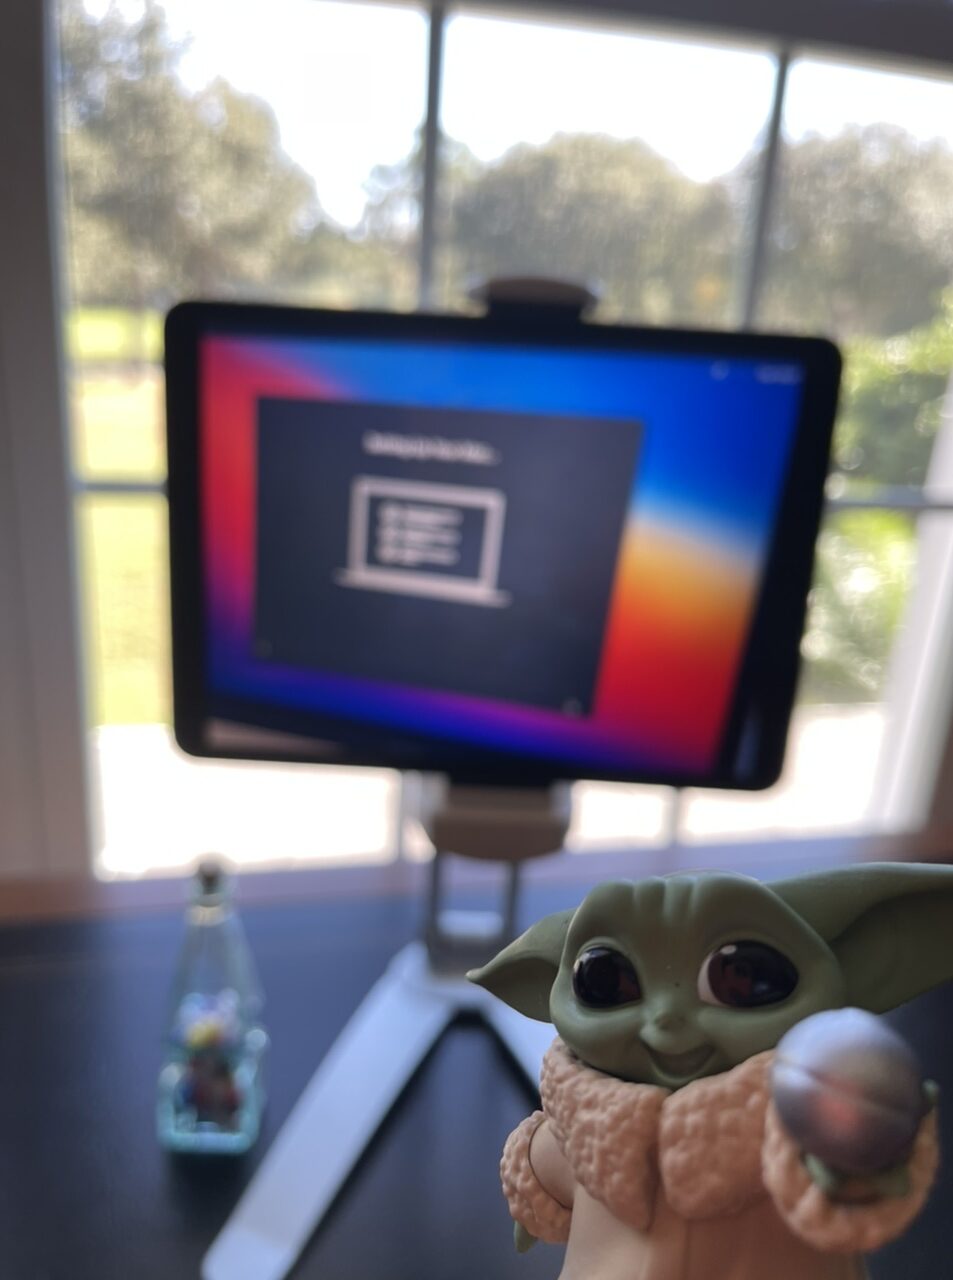 Baby Yoda toy and iPad at a desk